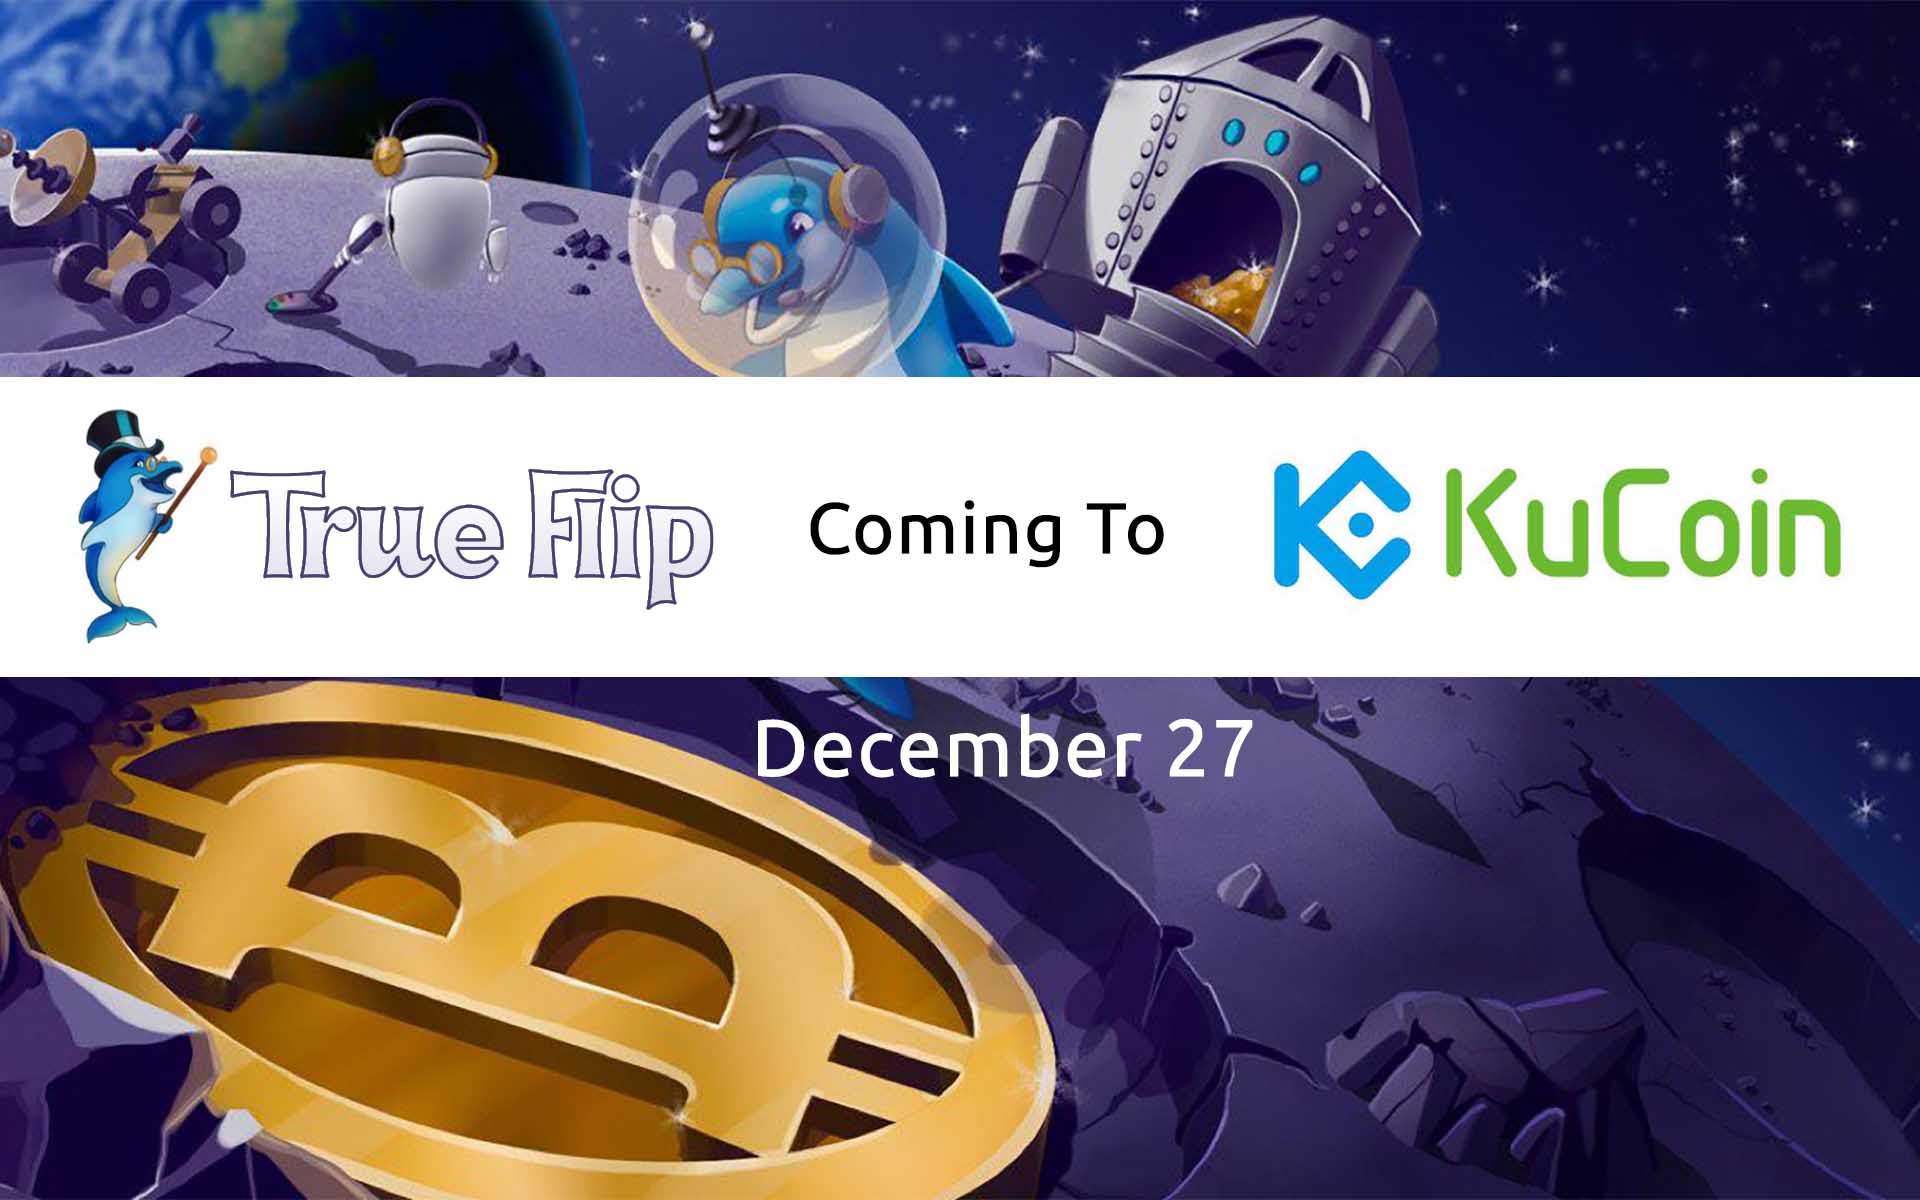 True Flip Trading Promotion On KuCoin: Trading Starts On December 27, 39,000 True Flip in Prizes!